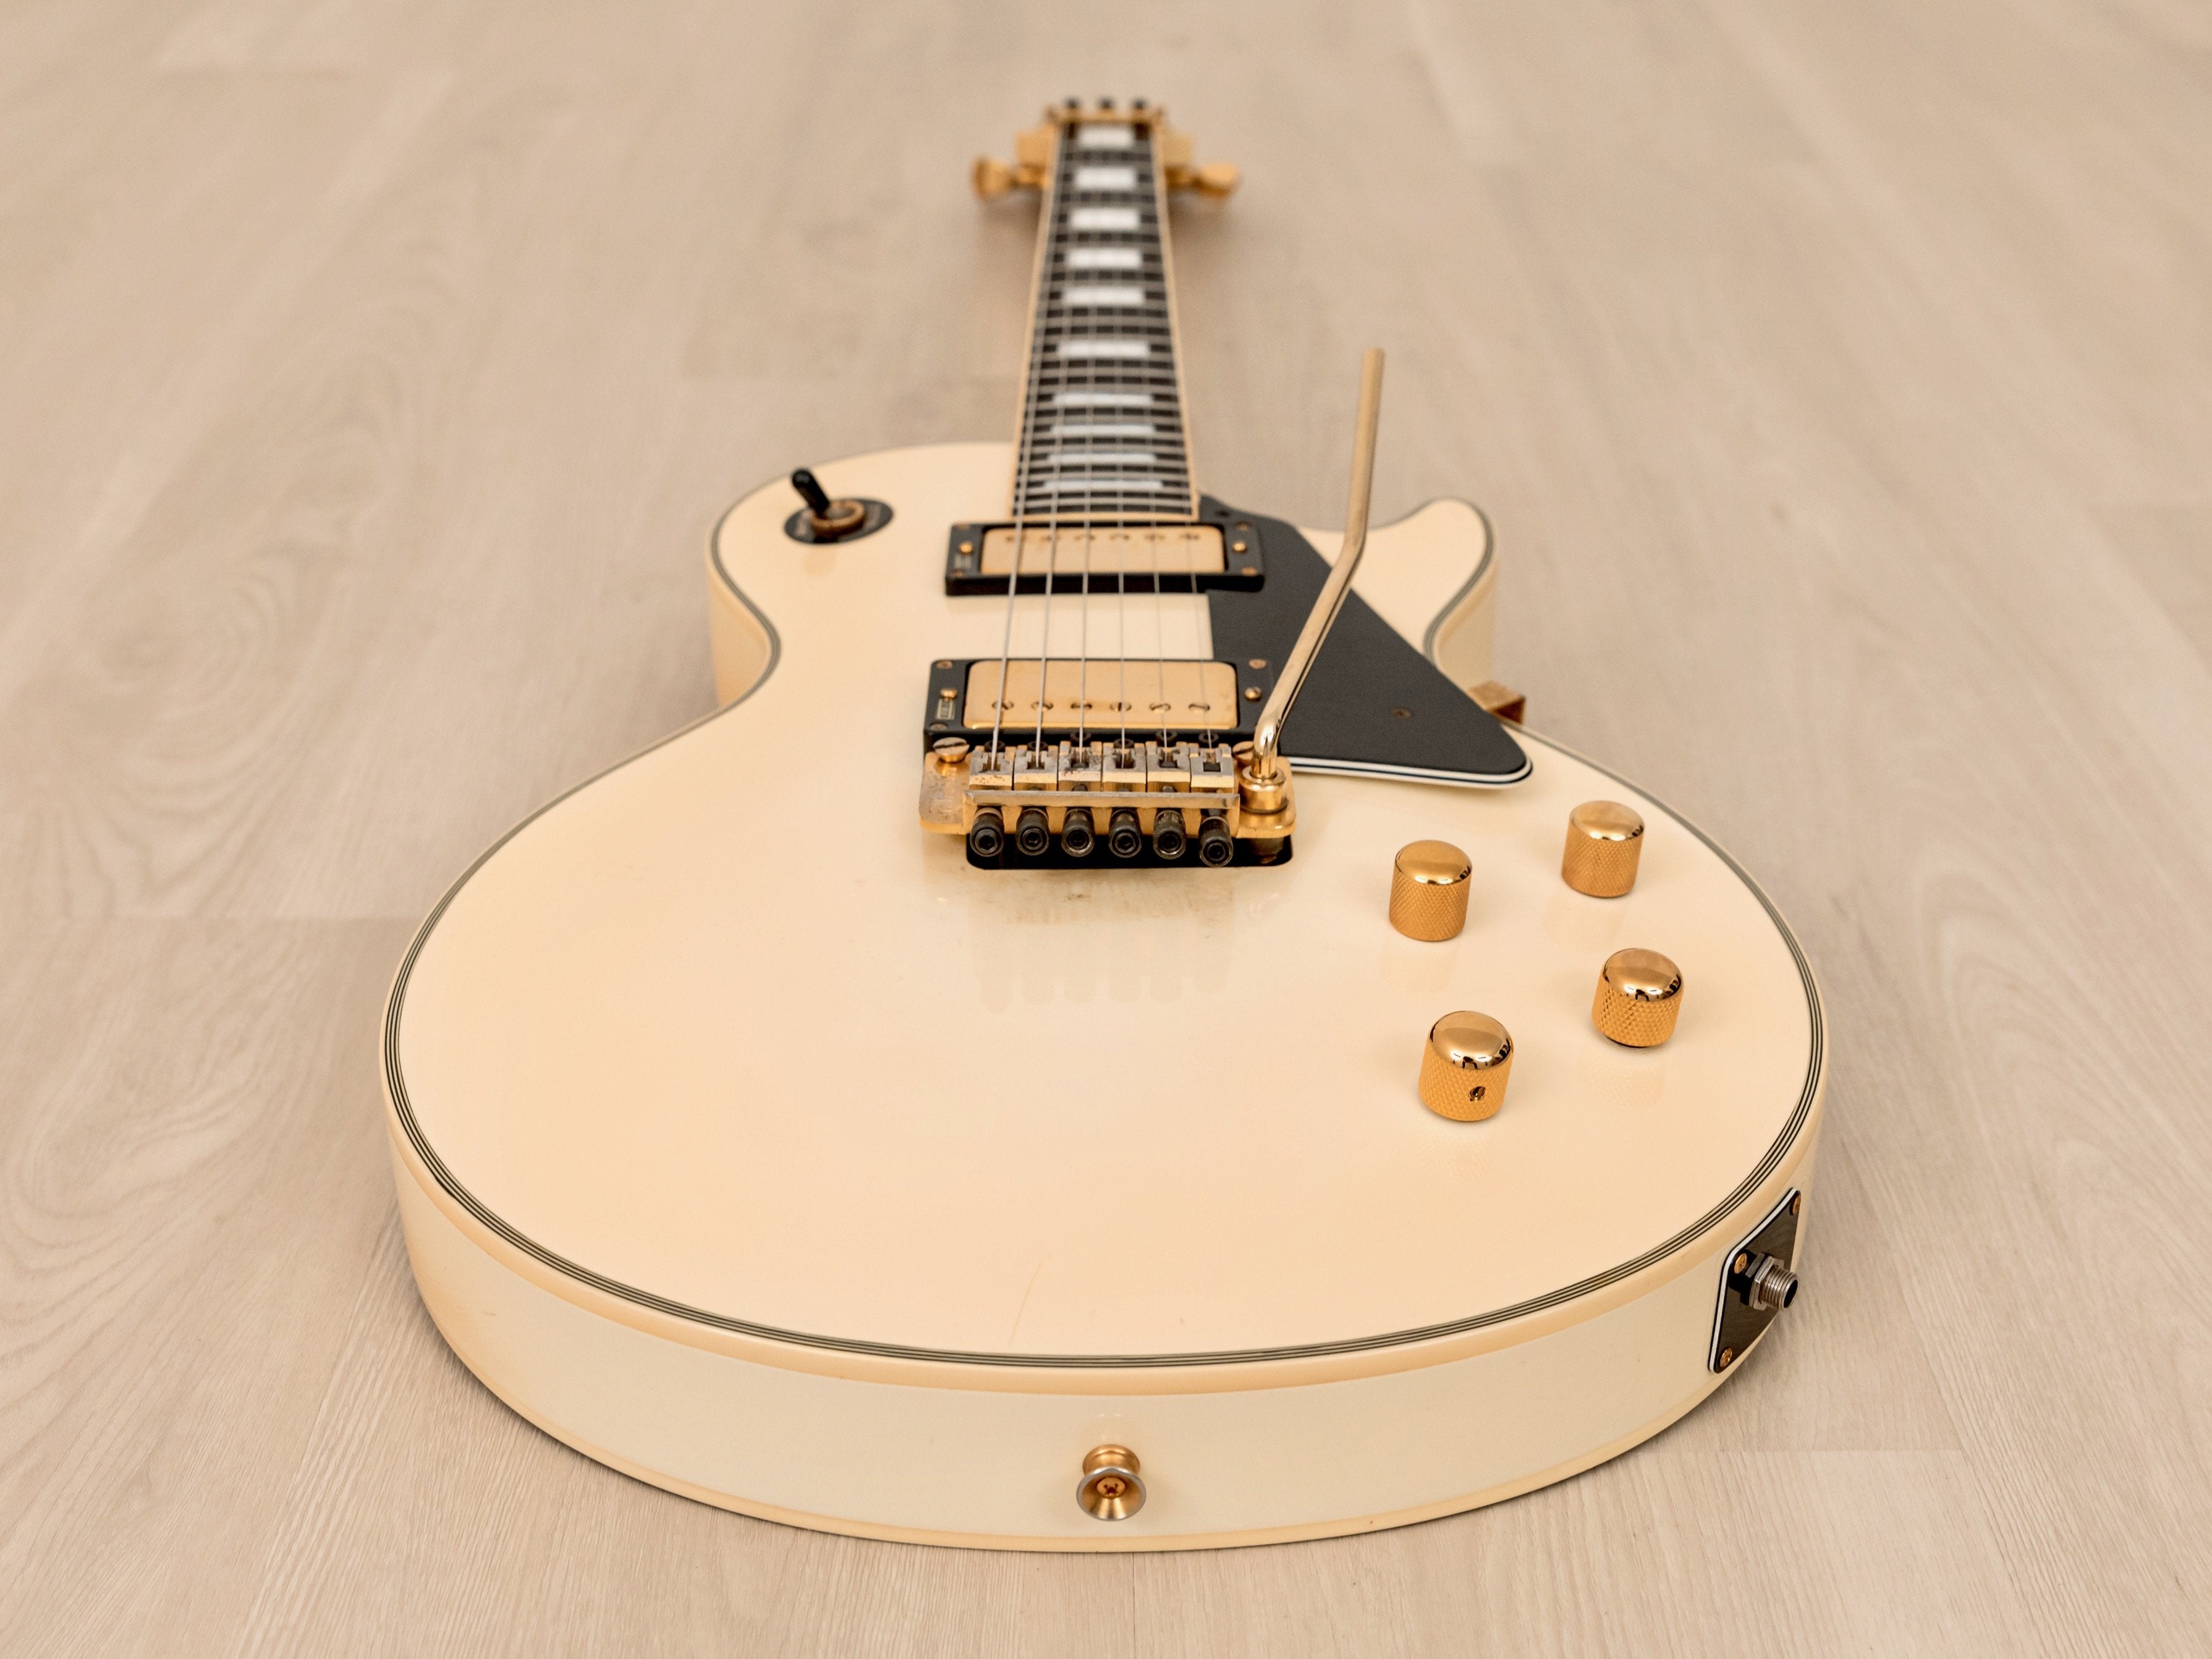 1989 Burny LC-100YS Yasu Signature Vintage Guitar Snow White w/ Tremolo & Case, Japan Fernandes